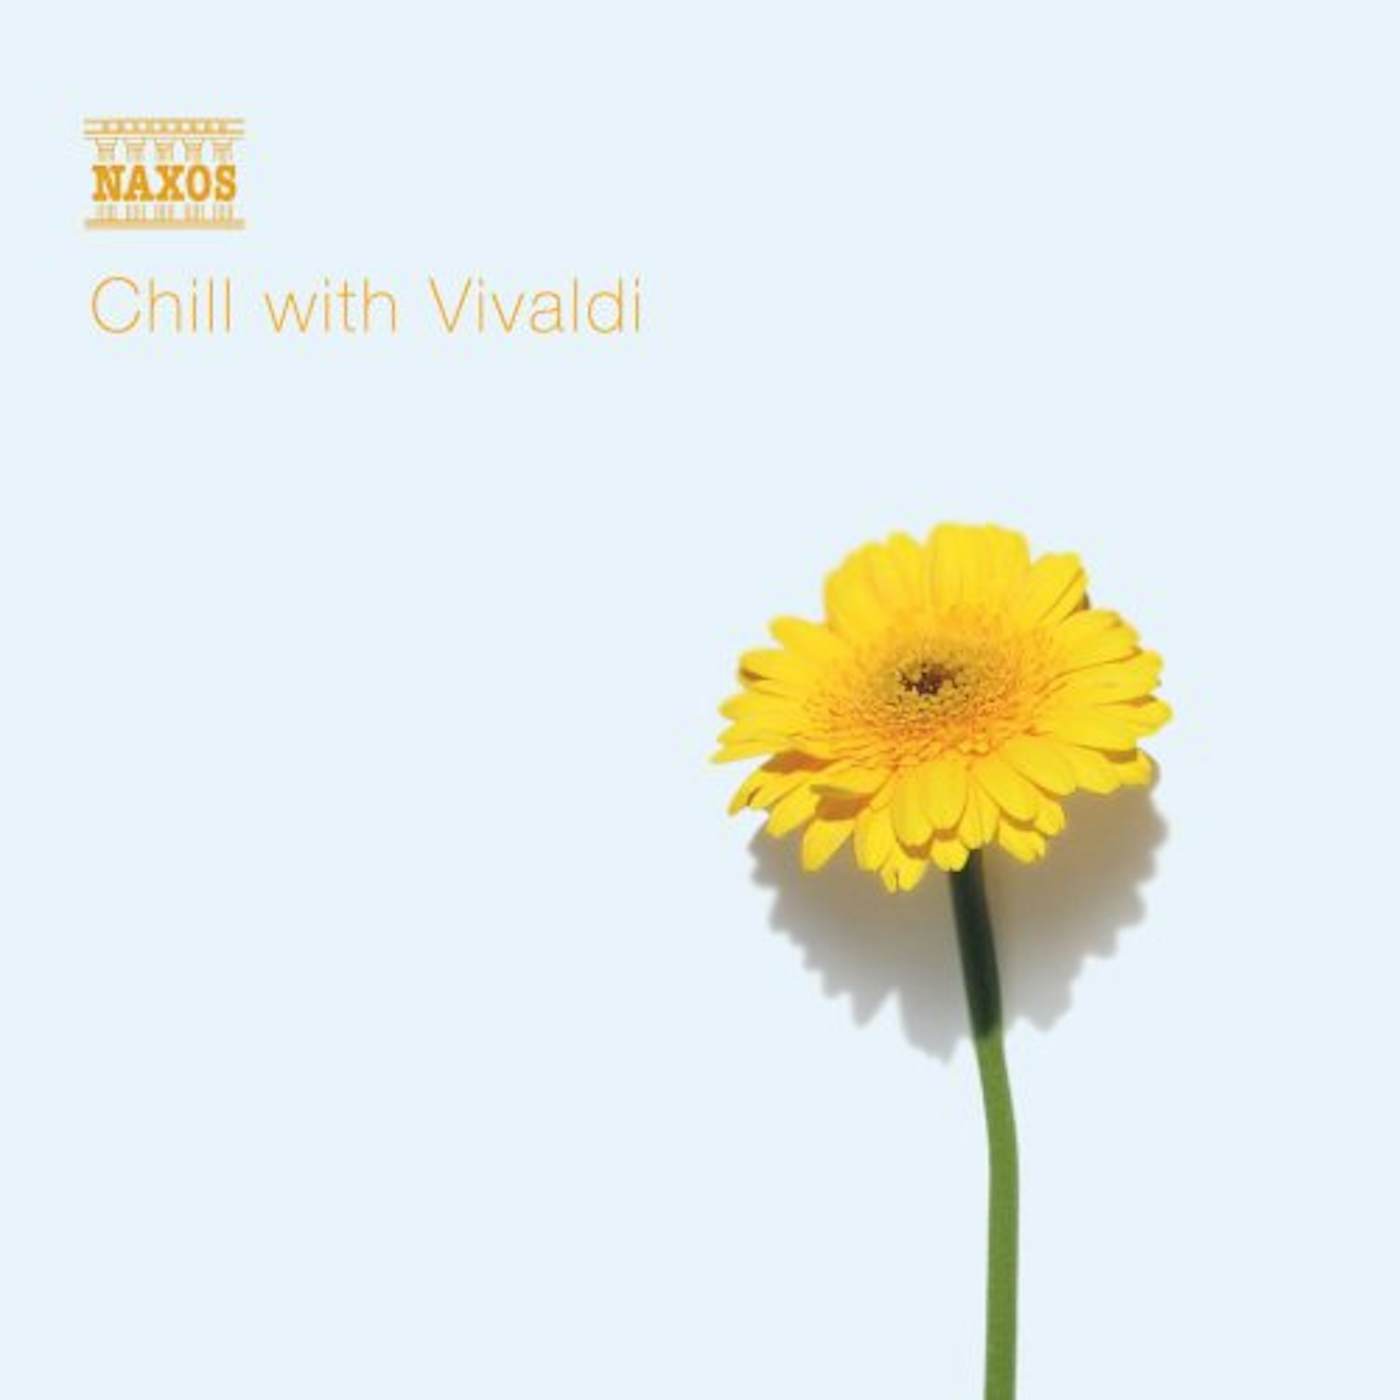 CHILL WITH Antonio Vivaldi CD